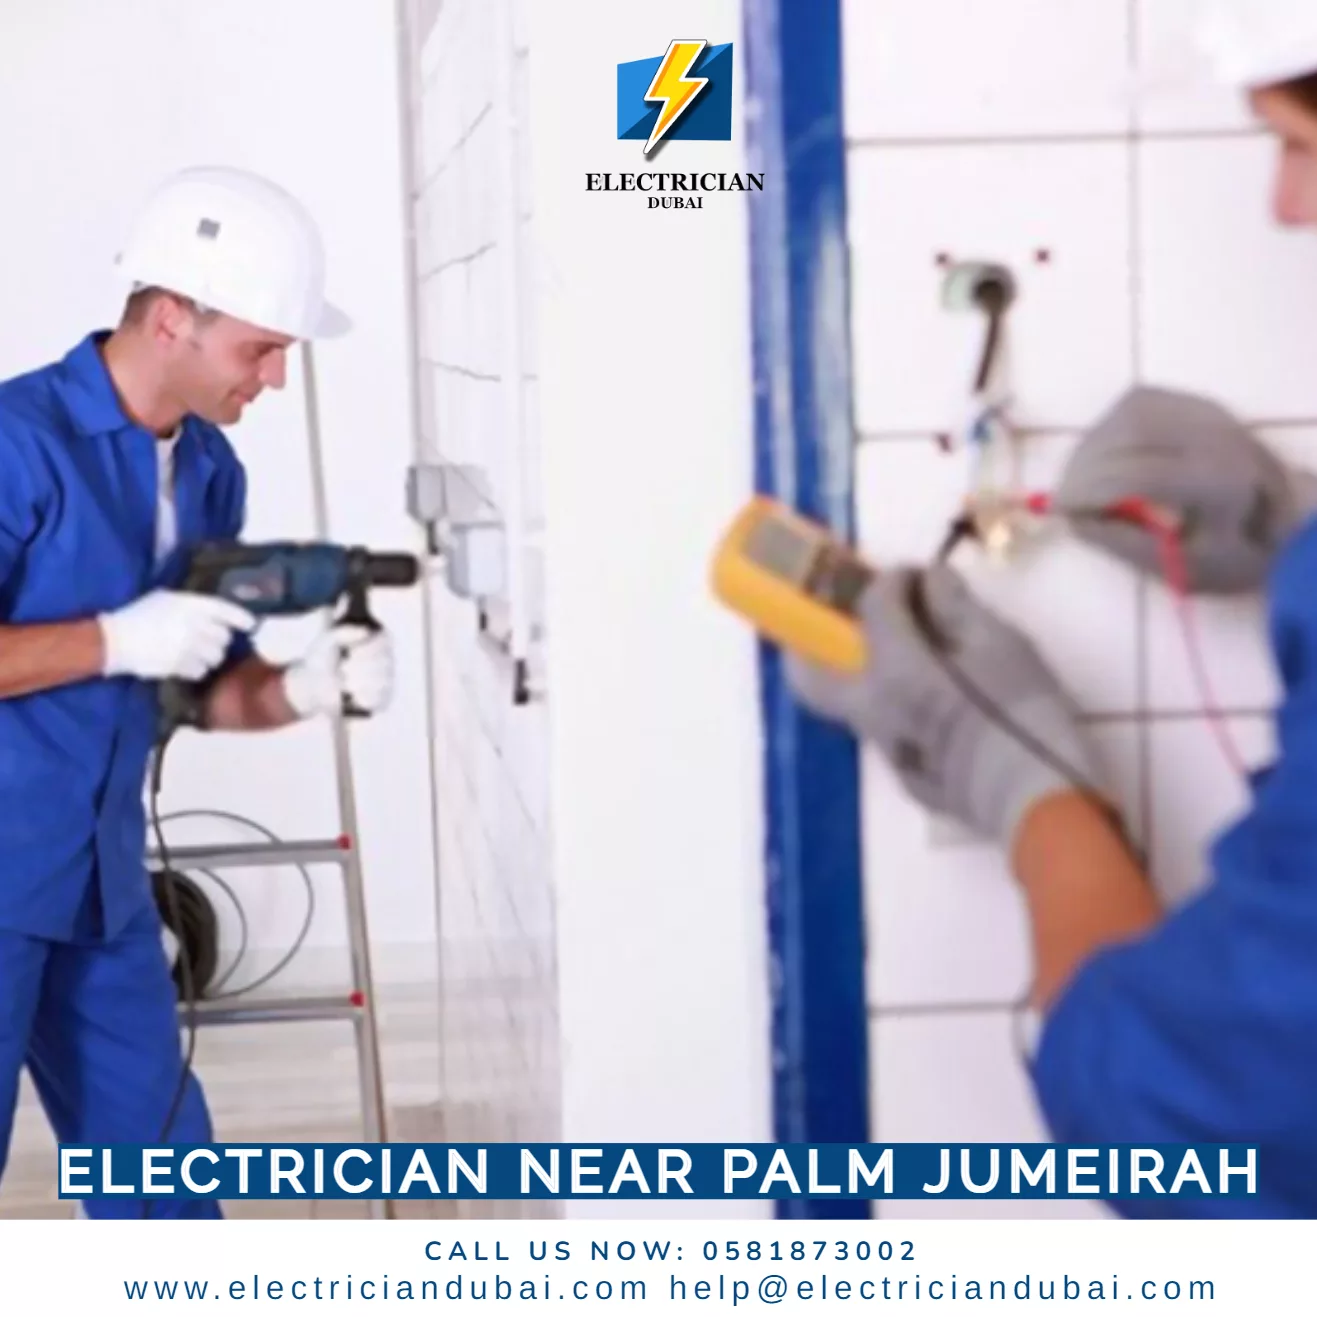 Electrician near palm Jumeirah